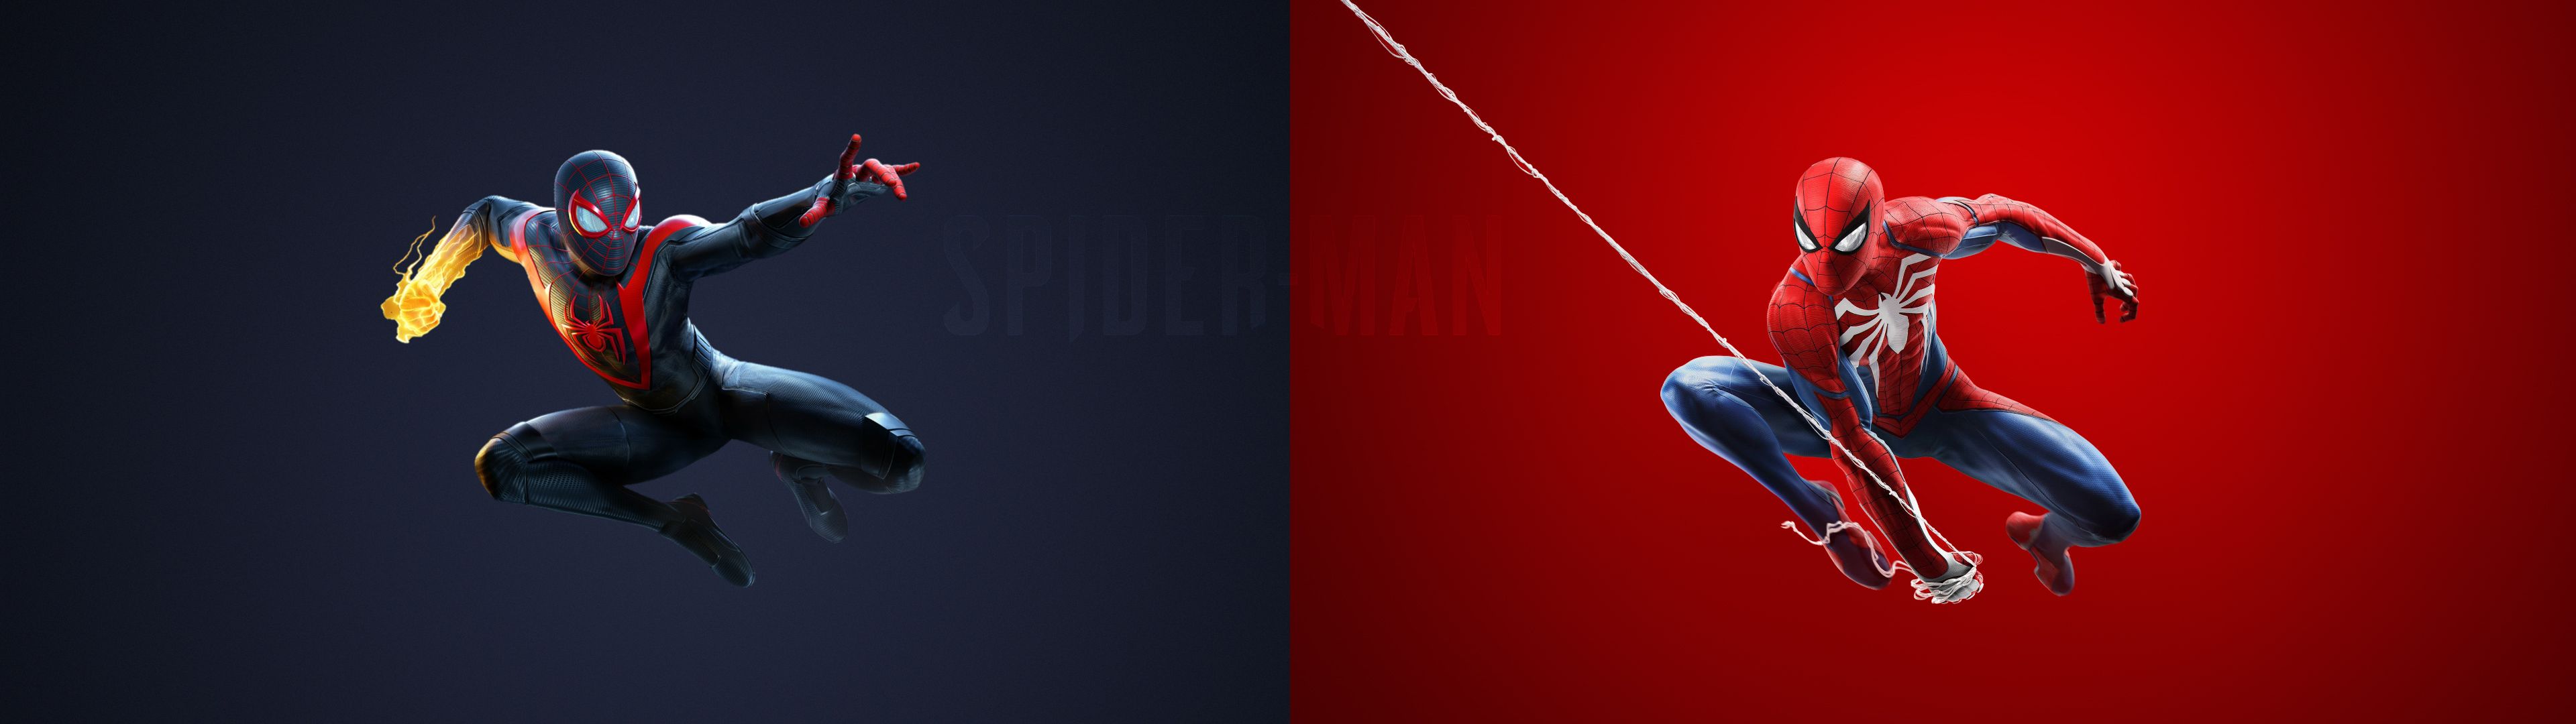 Dual Monitor Spiderman X Miles Morales PS5 Wallpaper (3840x1080). Dual monitor wallpaper, Active wallpaper, Wallpaper